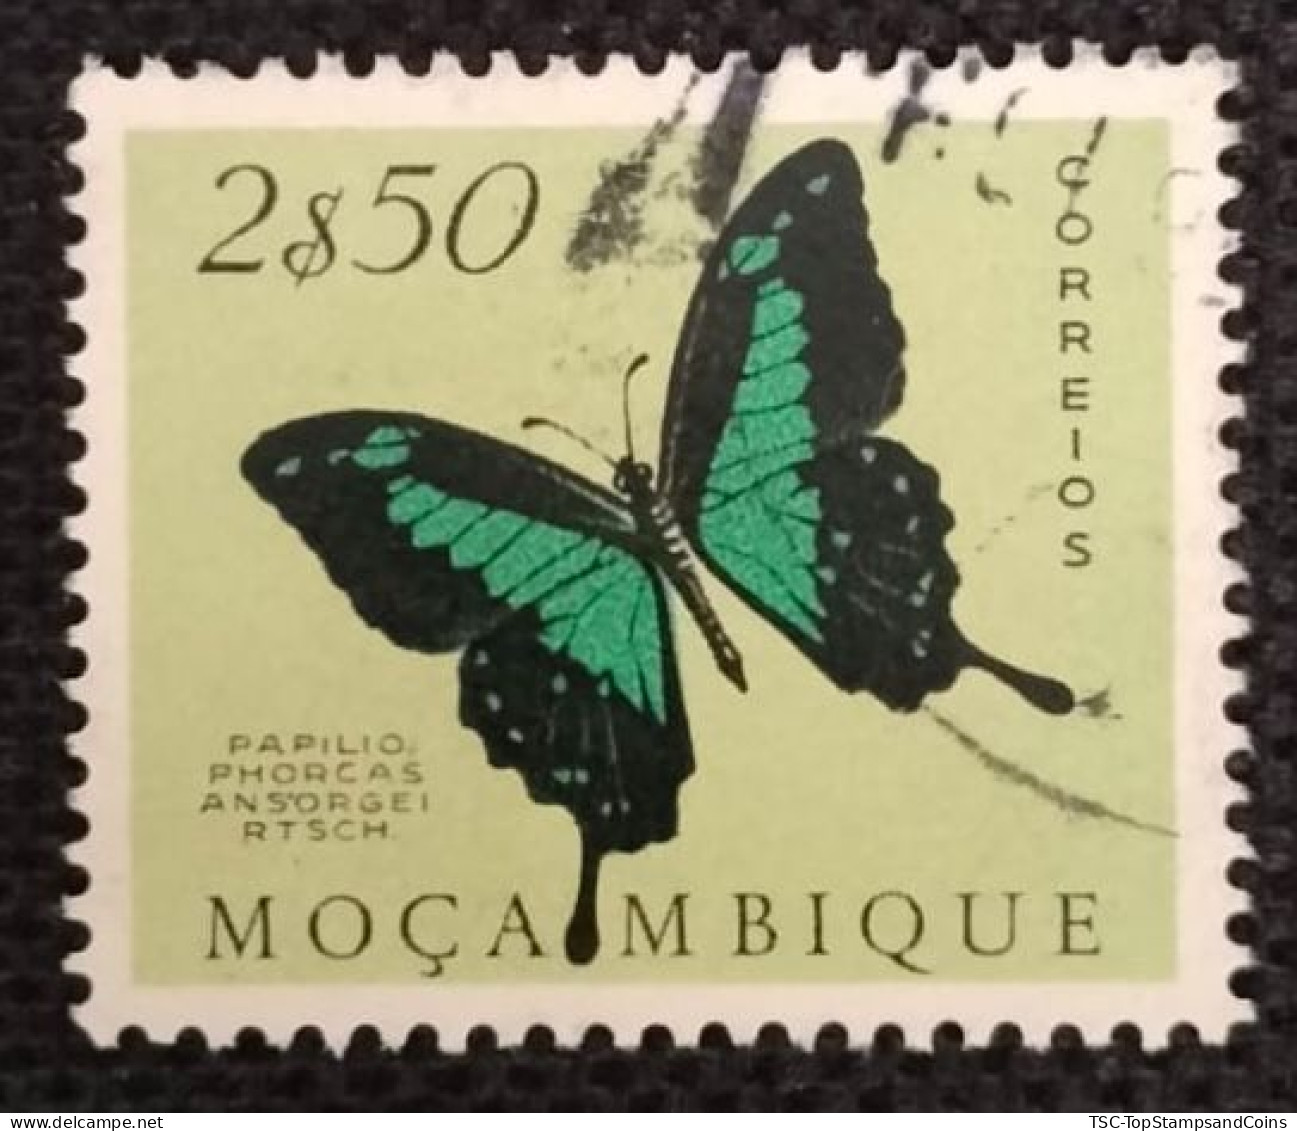 MOZPO0399UB - Mozambique Butterflies  - 2$50 Used Stamp - Mozambique - 1953 - Mozambique